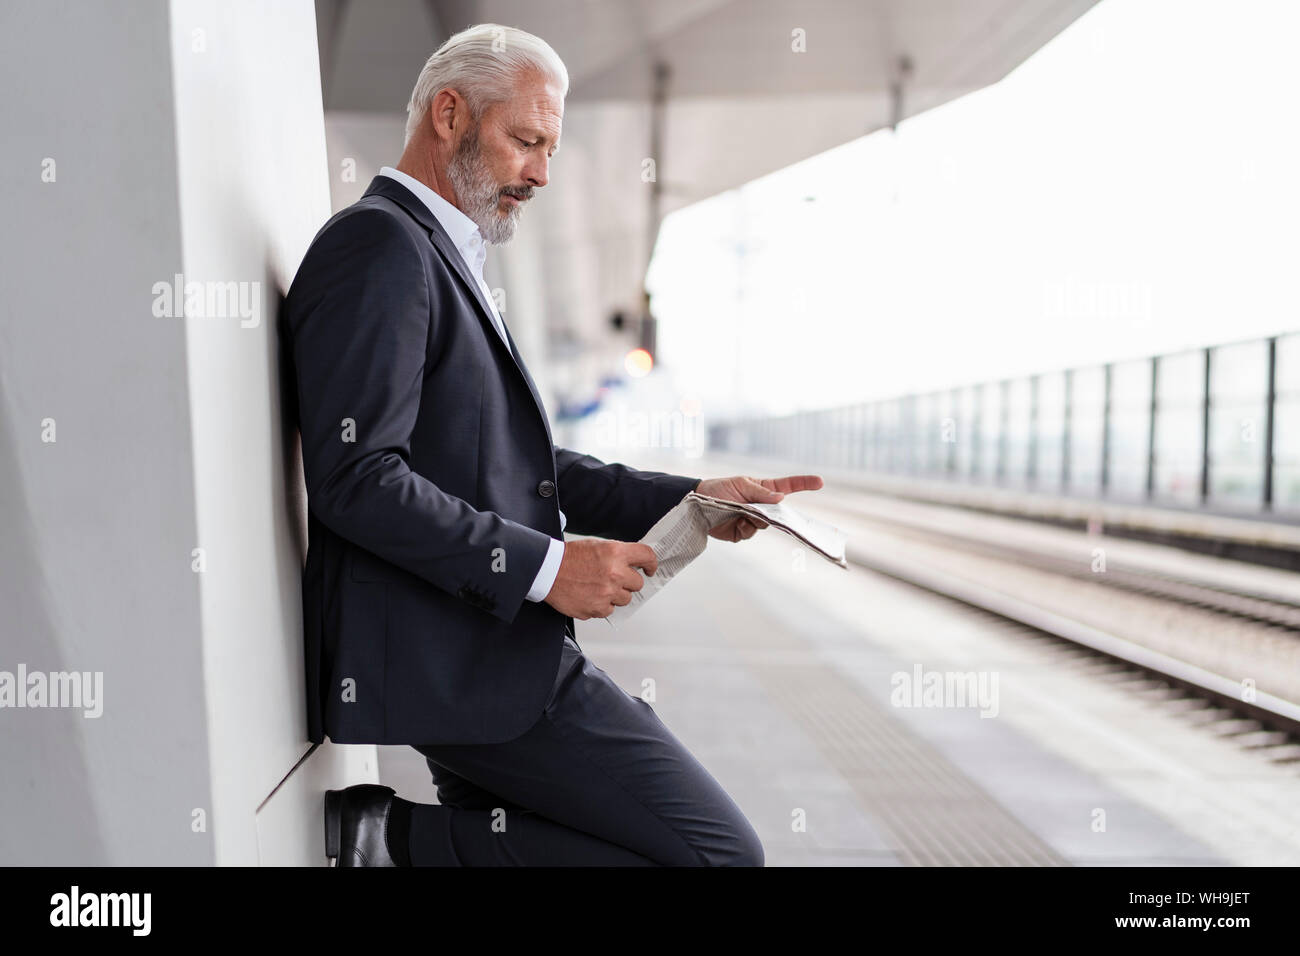 Mature businessman reading newspaper at the station platform Stock Photo